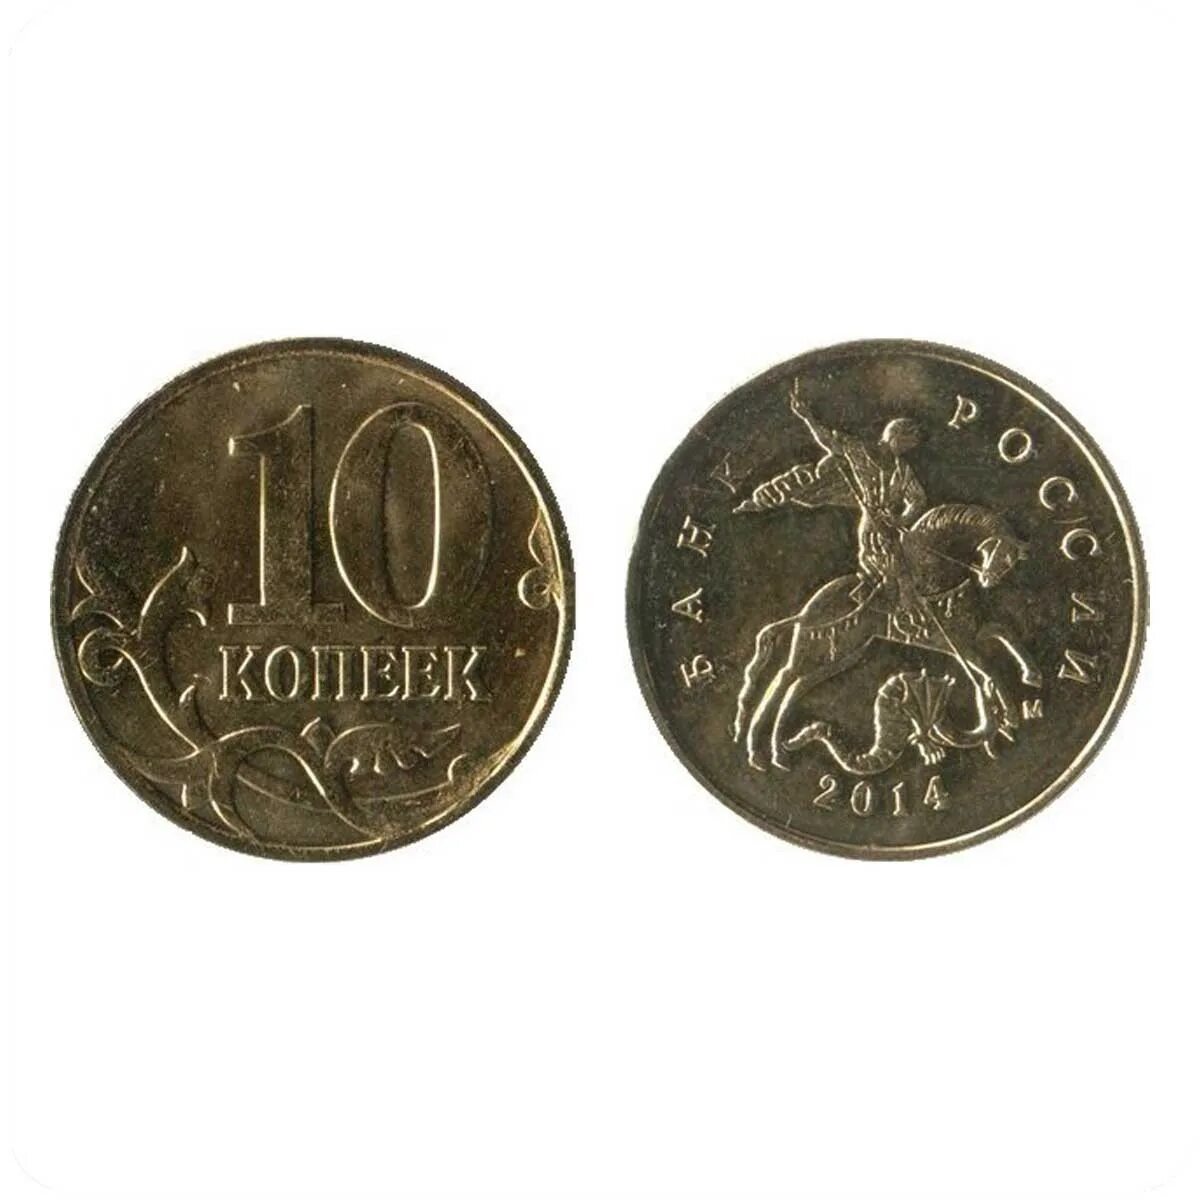 Монетка в 10 копеек. Монета 10 копеек. Российская монета 10 копеек 2014. 10 Копеек современные. 10 Копеек 10 копеек.